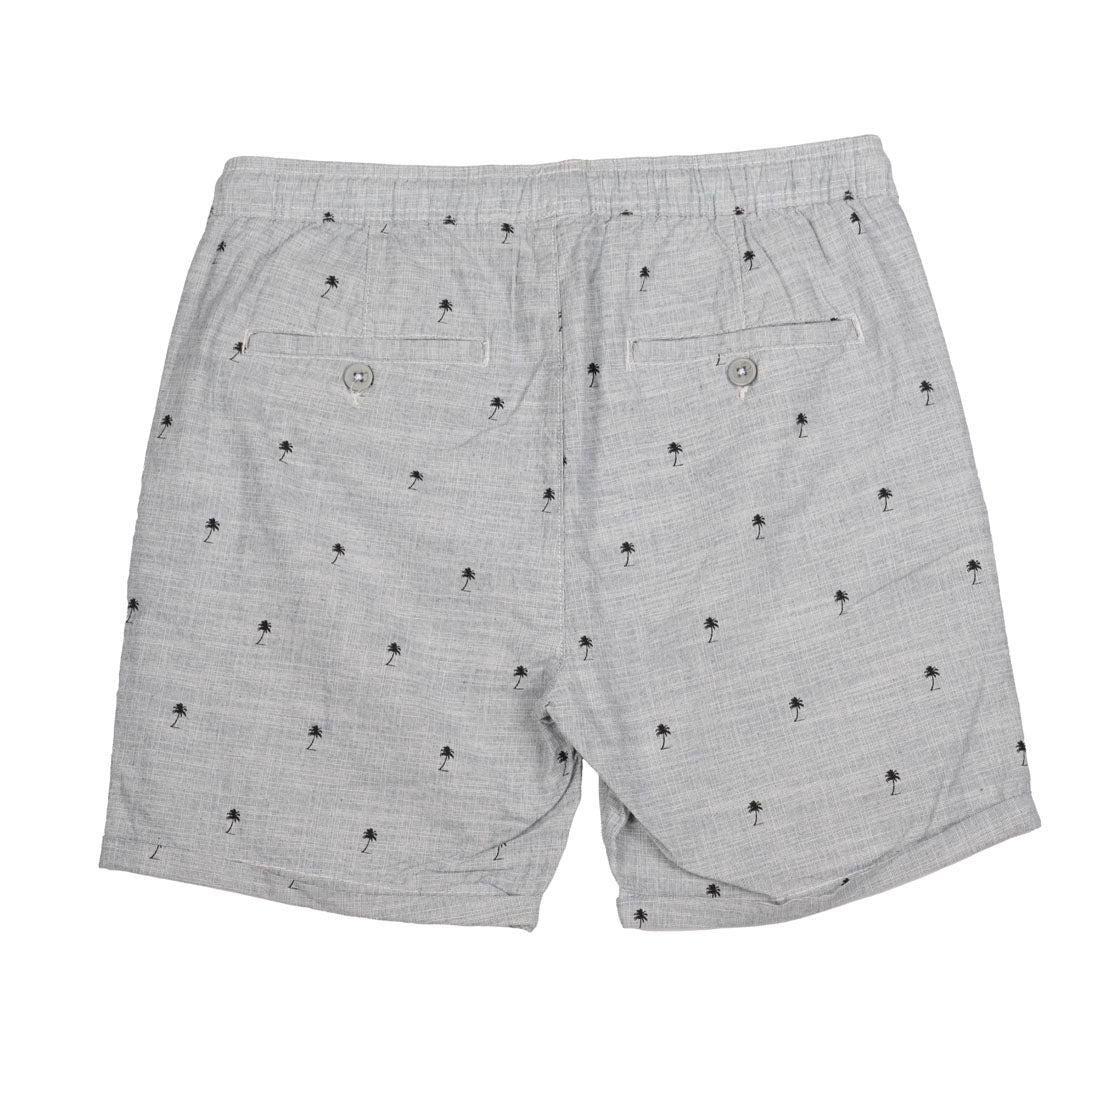 Resort Brand New Shorts For Men - mymadstore.com